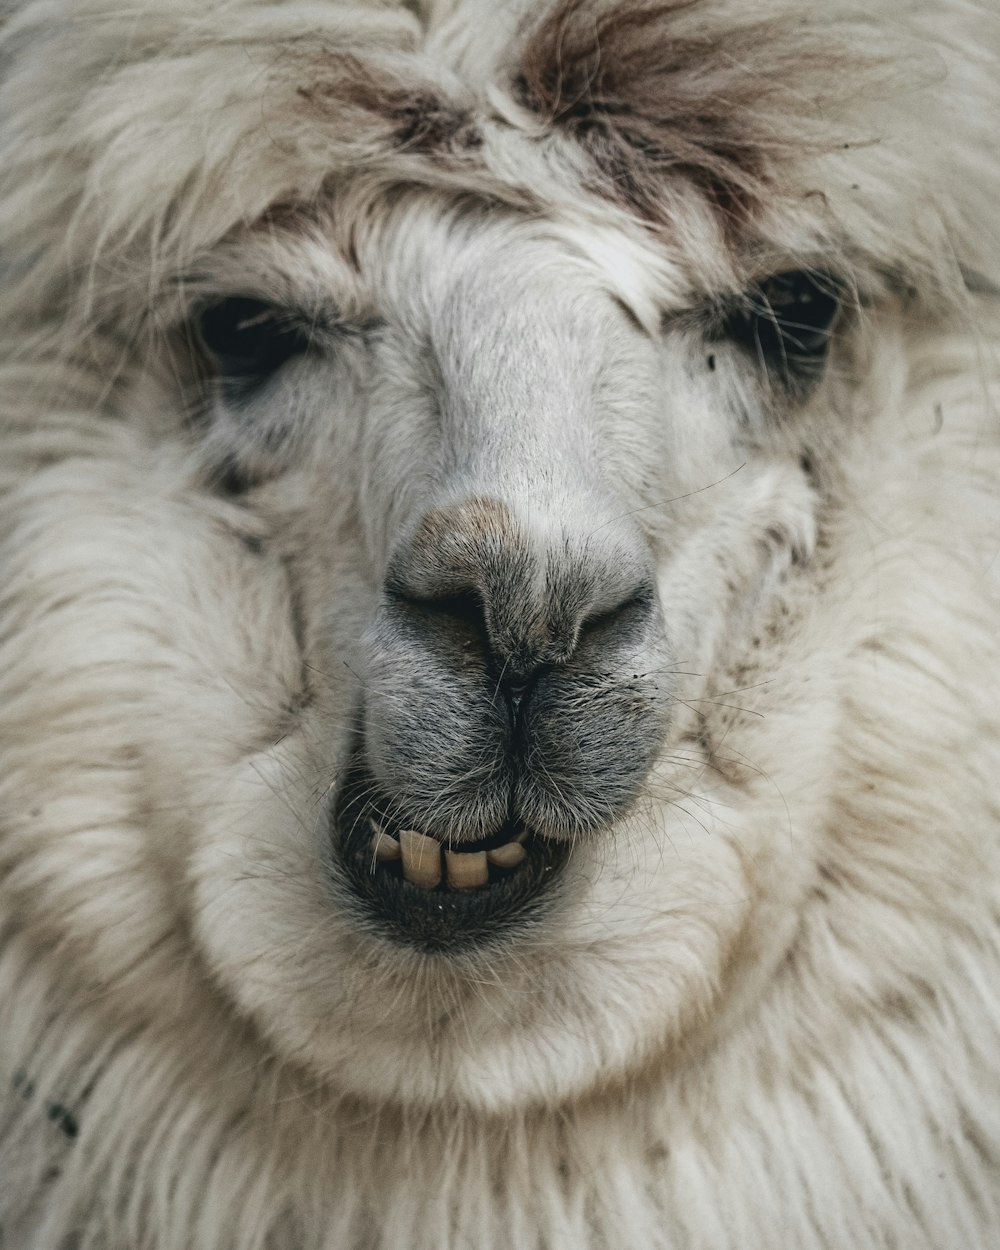 a close up of a llama's face with long hair